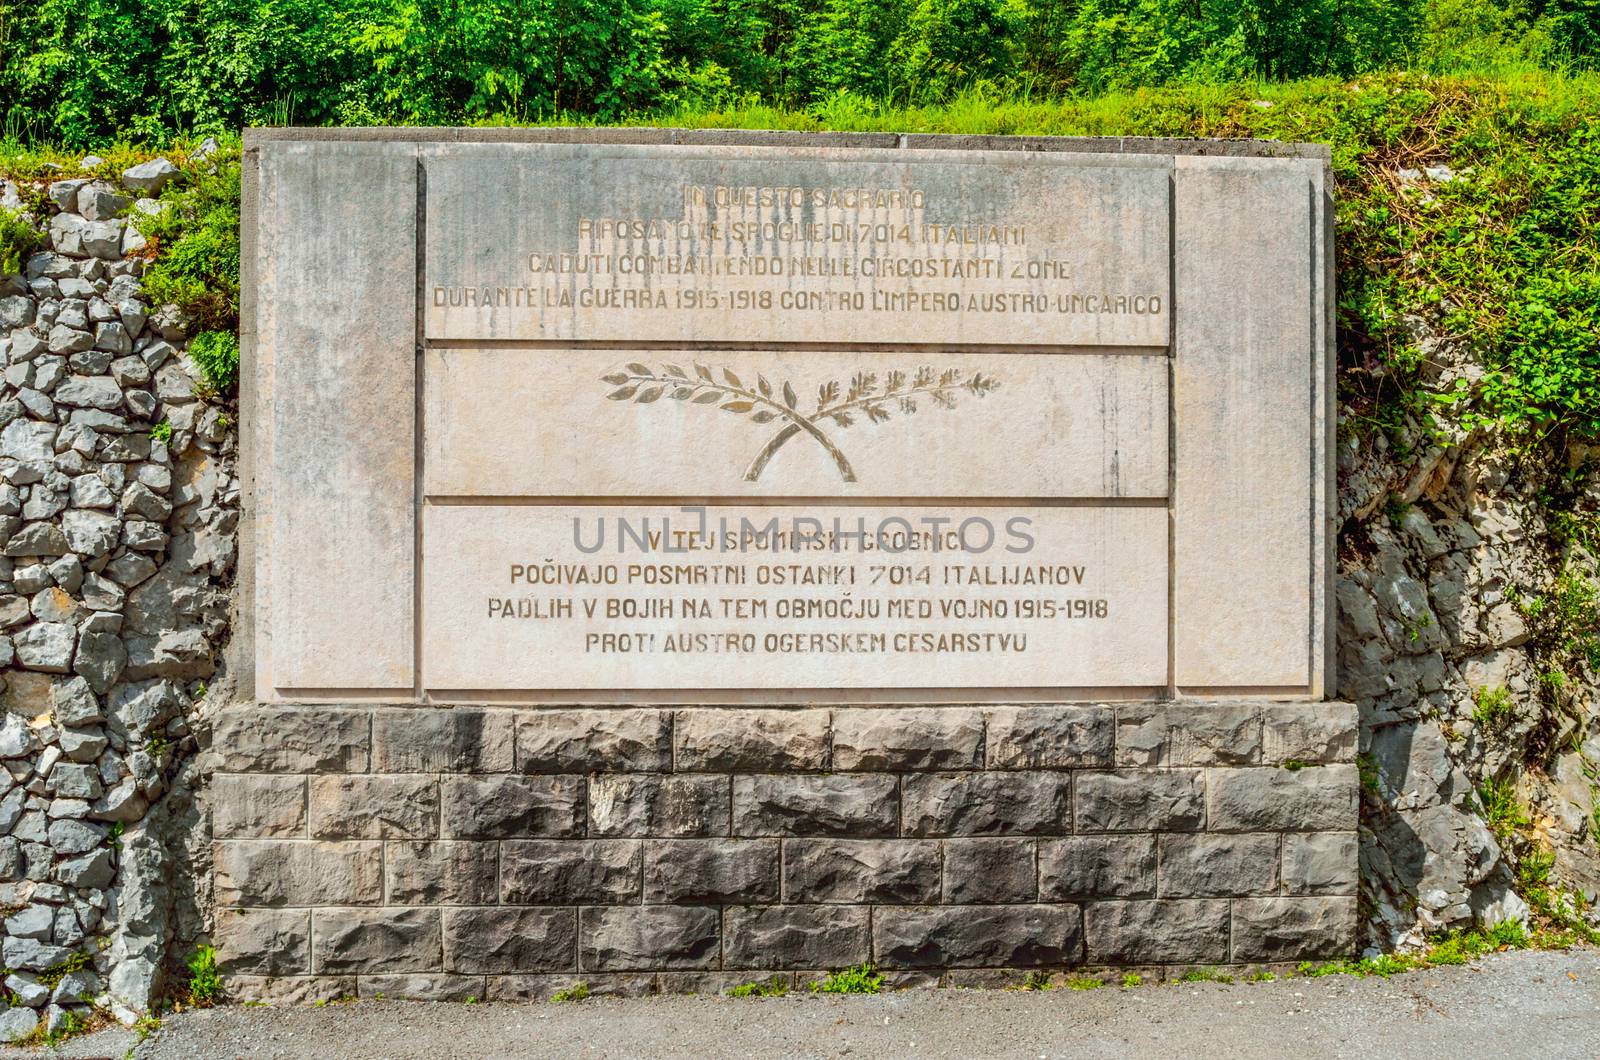 Kobarid, Slovenia, 4 June 2013 - the italian military memorial in Caporetto, World War I landmark in Europe